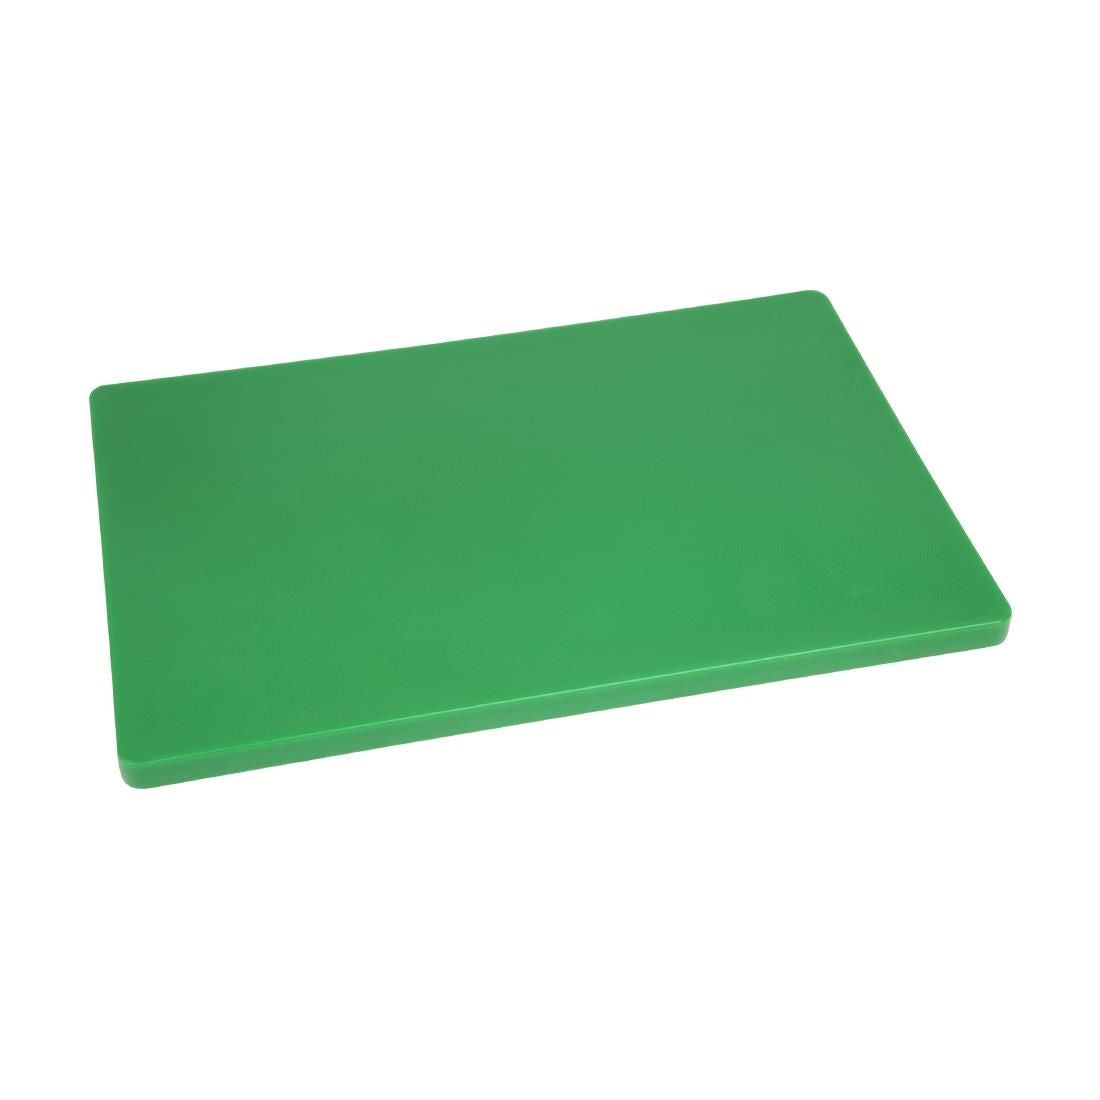 DM006 Hygiplas Extra Thick Low Density Green Chopping Board Standard JD Catering Equipment Solutions Ltd